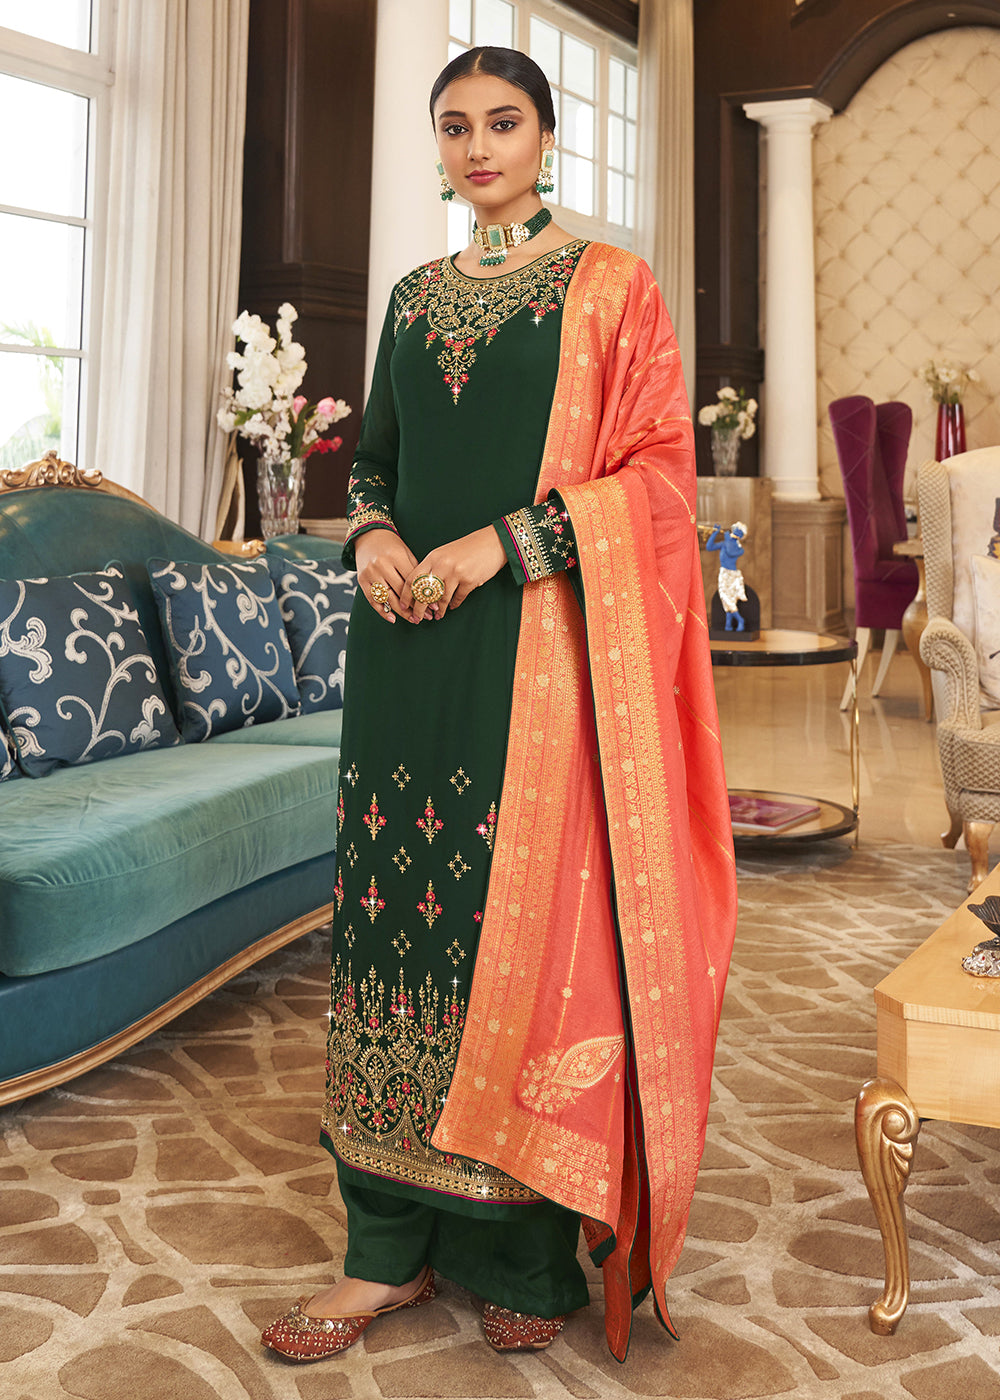 Buy Now Wedding Party Prodigious Green Thread & Zari Salwar SuitOnline in USA, UK, Canada & Worldwide at Empress Clothing.